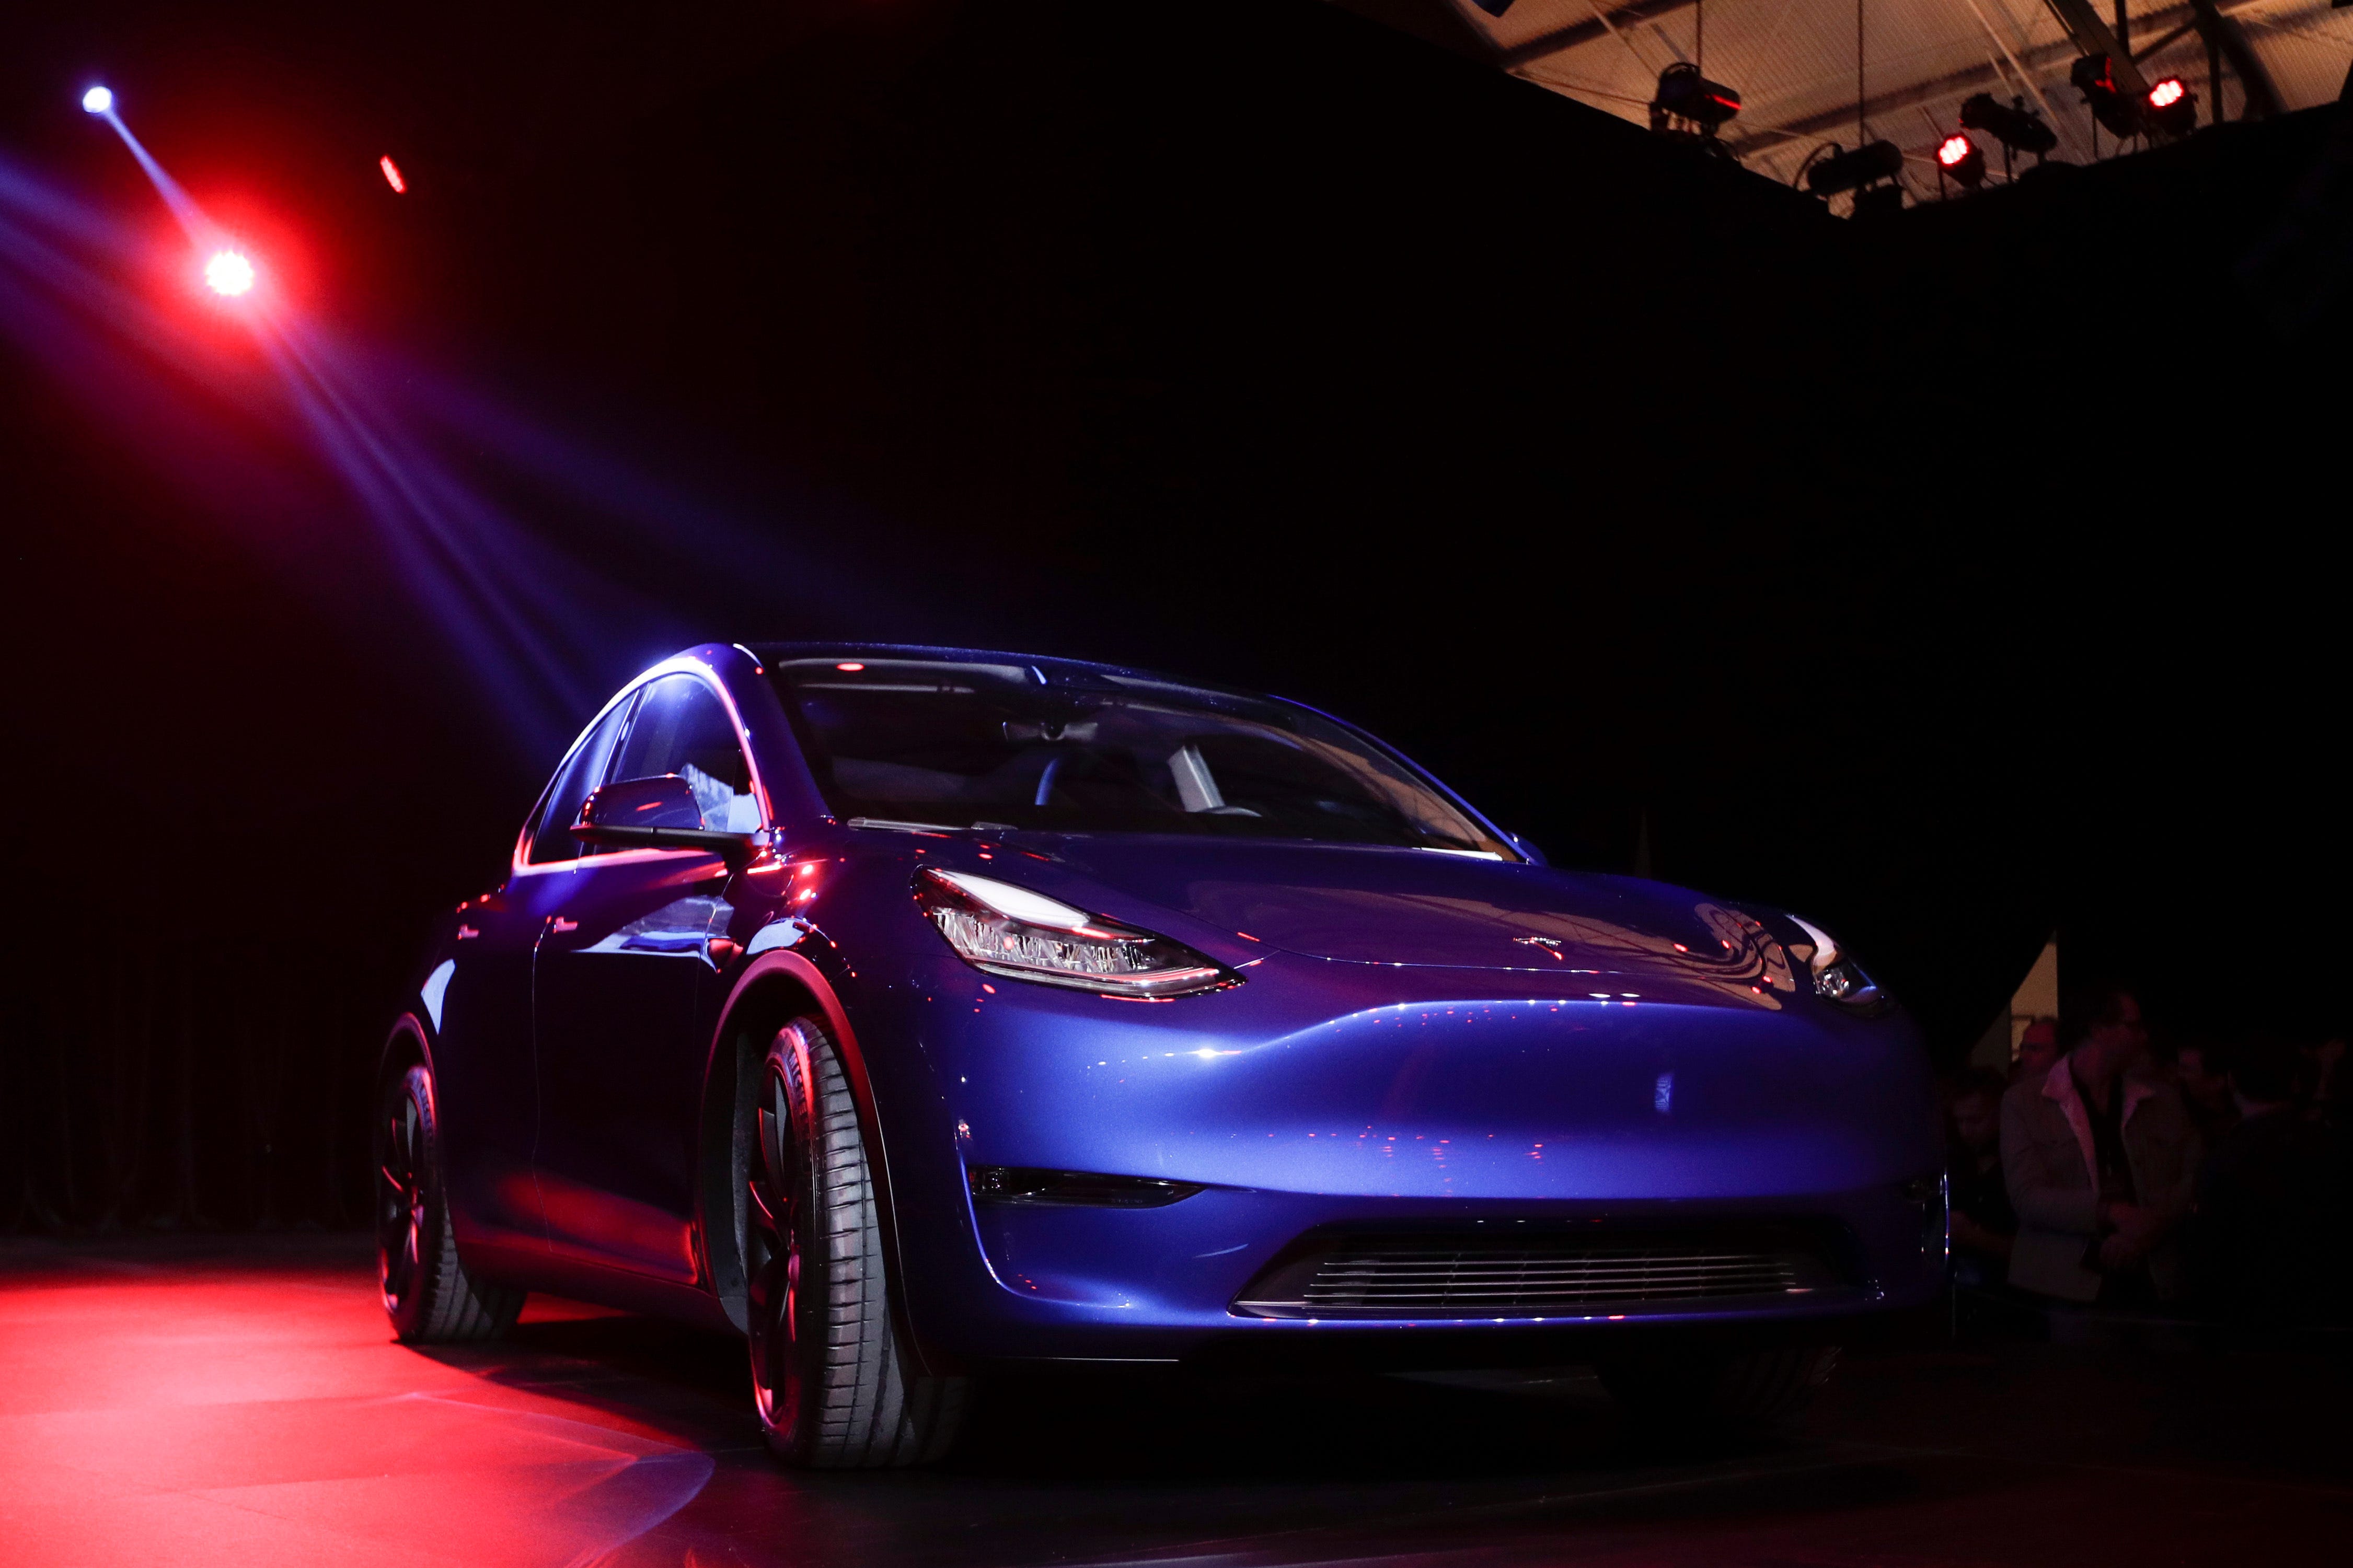 The Tesla Model Y is unveiled at Tesla's design studio in Hawthorne, Calif. Thursday, March 14, 2019.